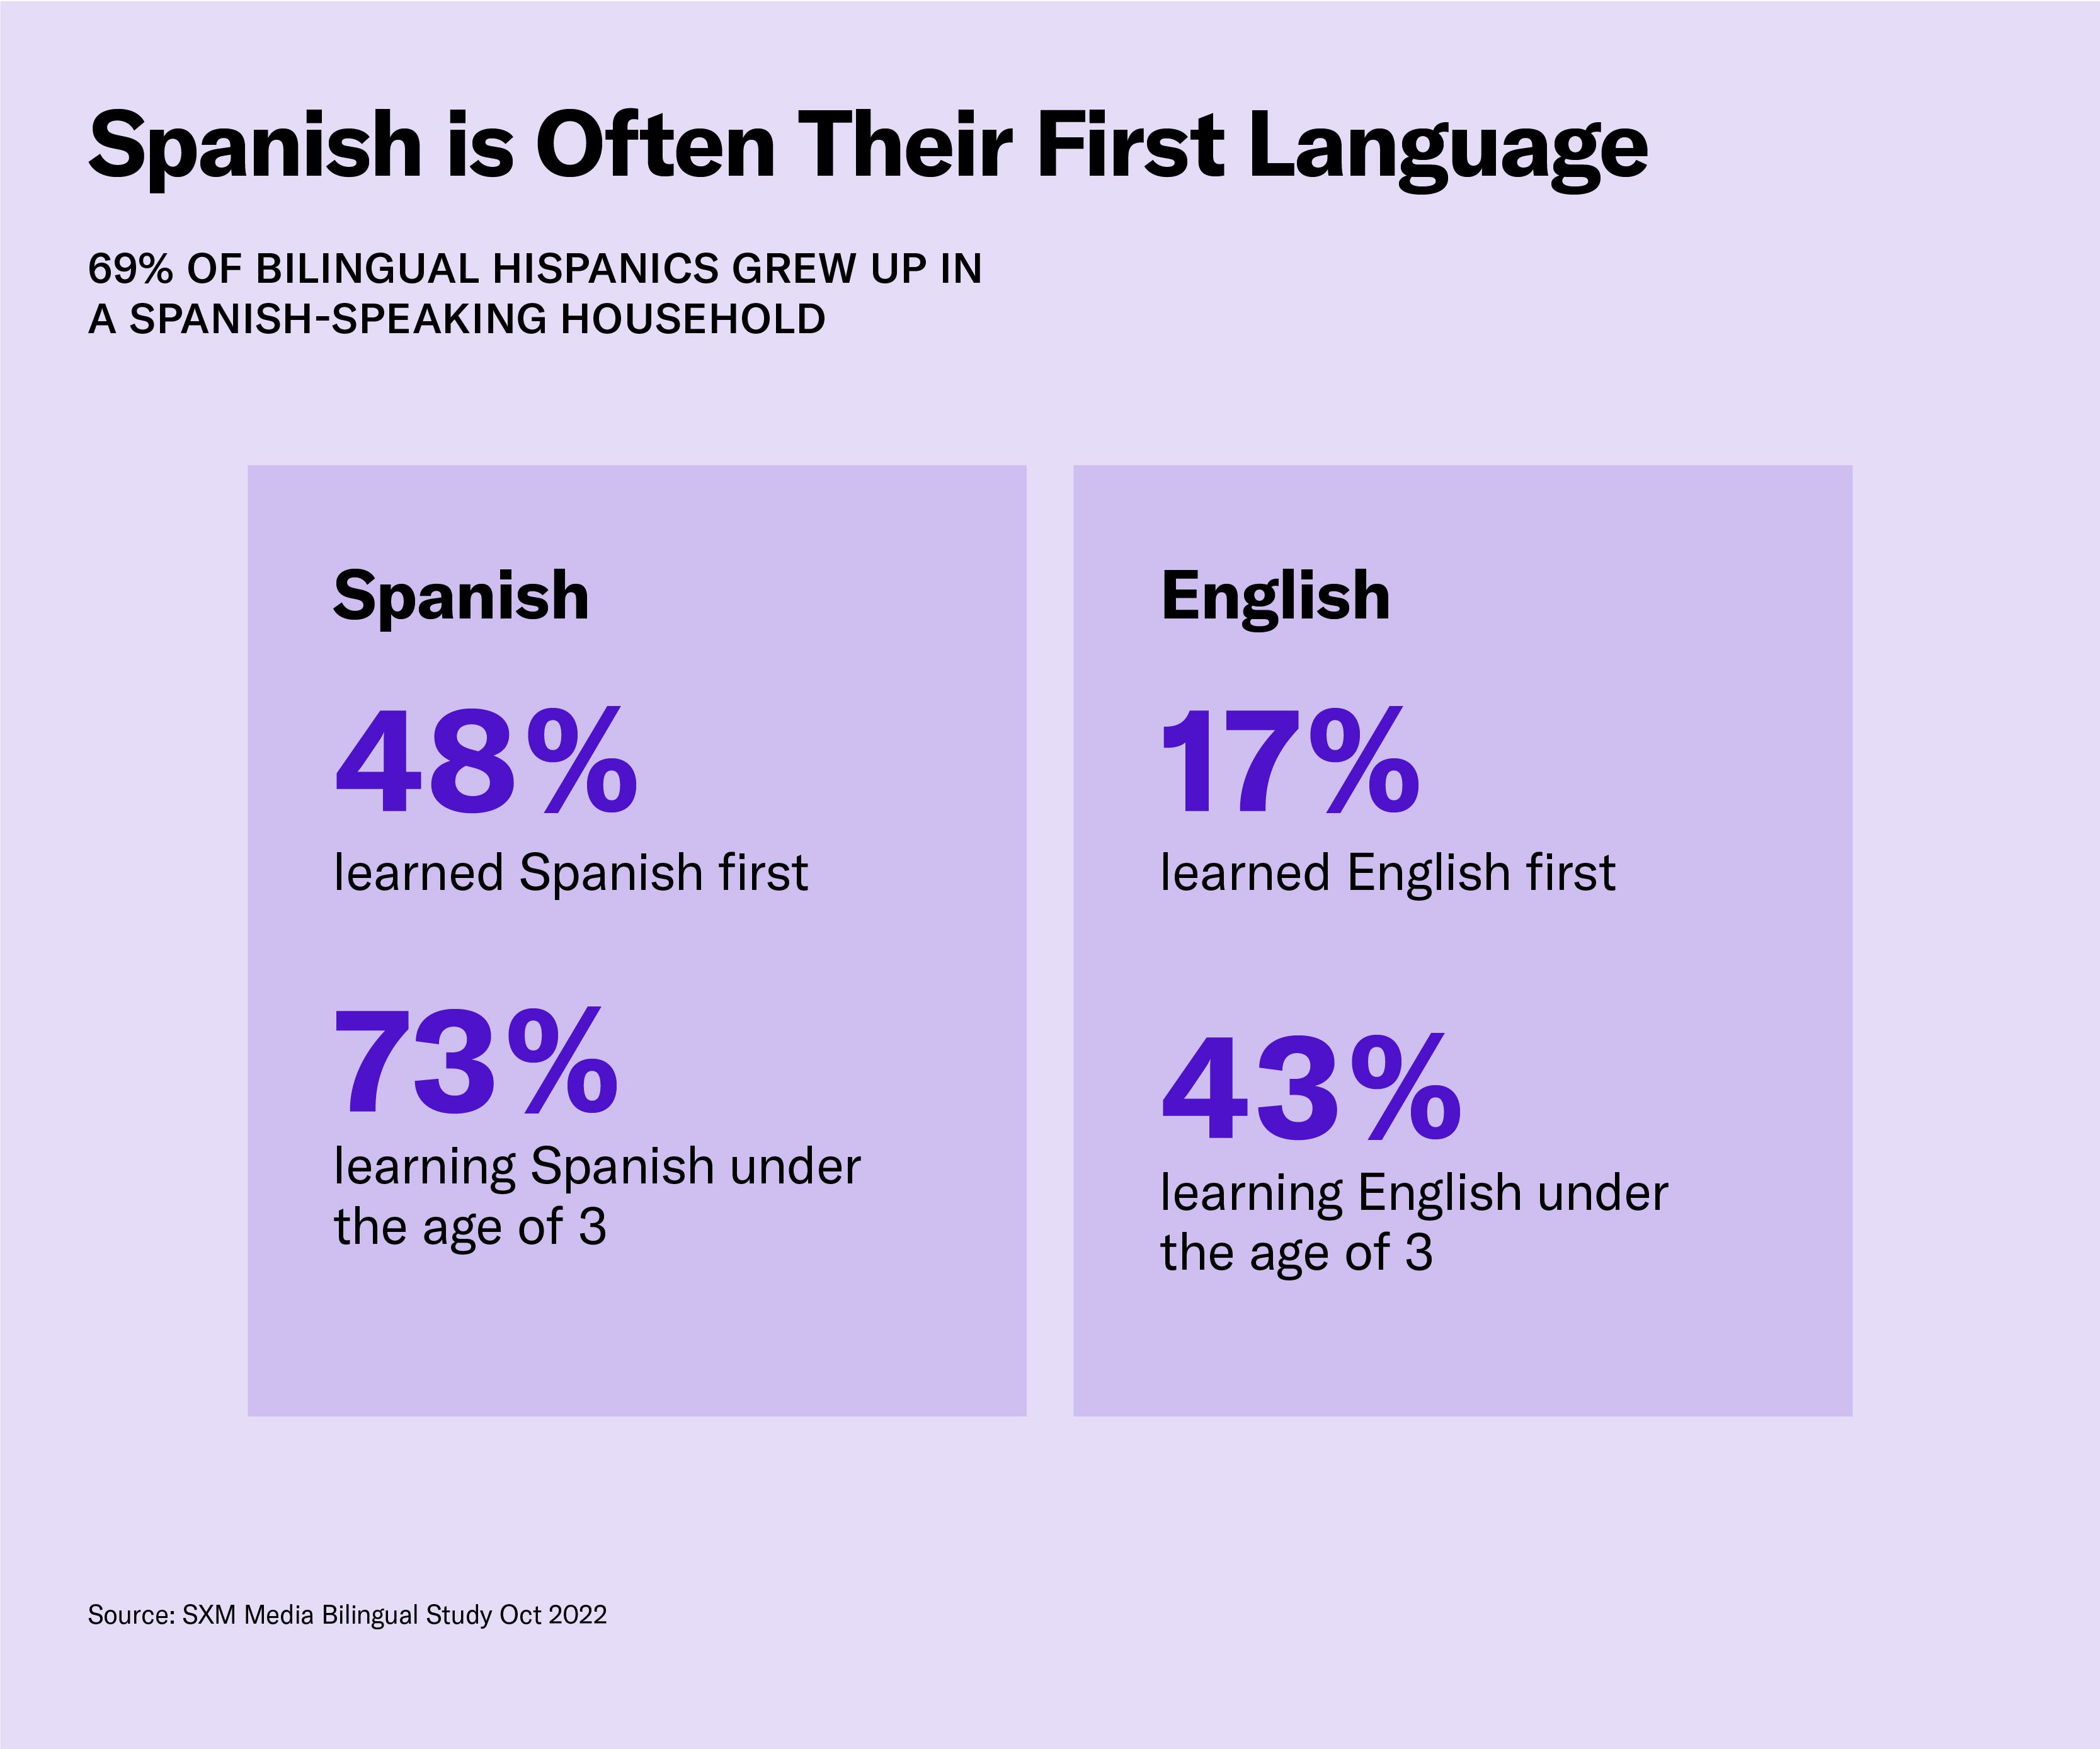 Spanish is often the first language for bilingual Hispanics